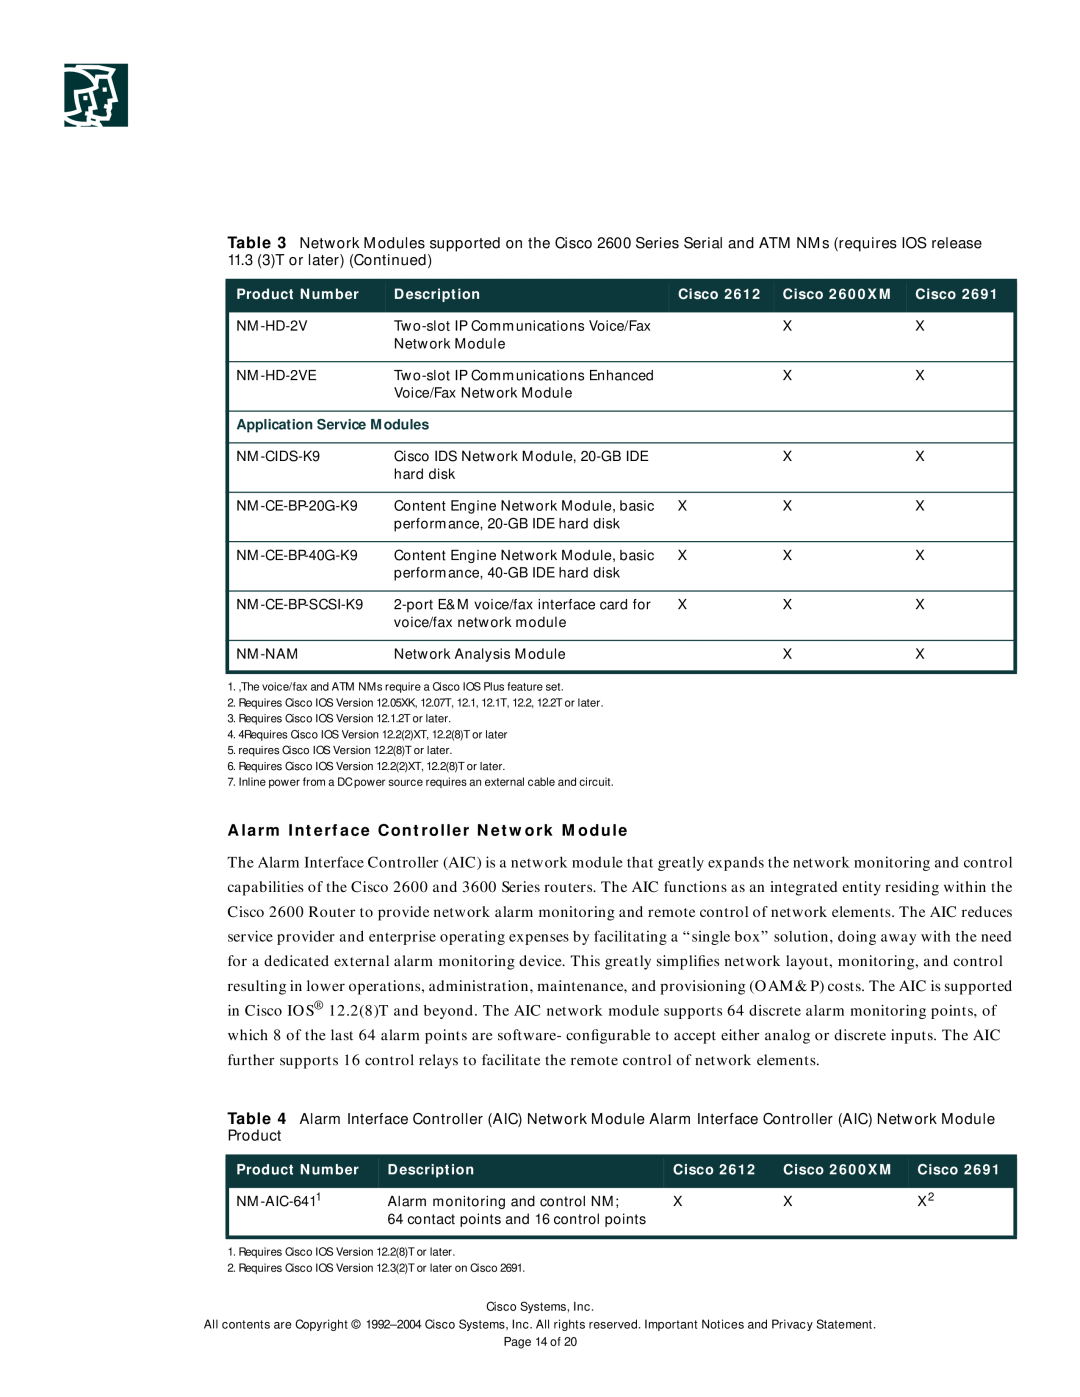 Cisco Systems 2600-DC Series manual Alarm Interface Controller Network Module, Application Service Modules 